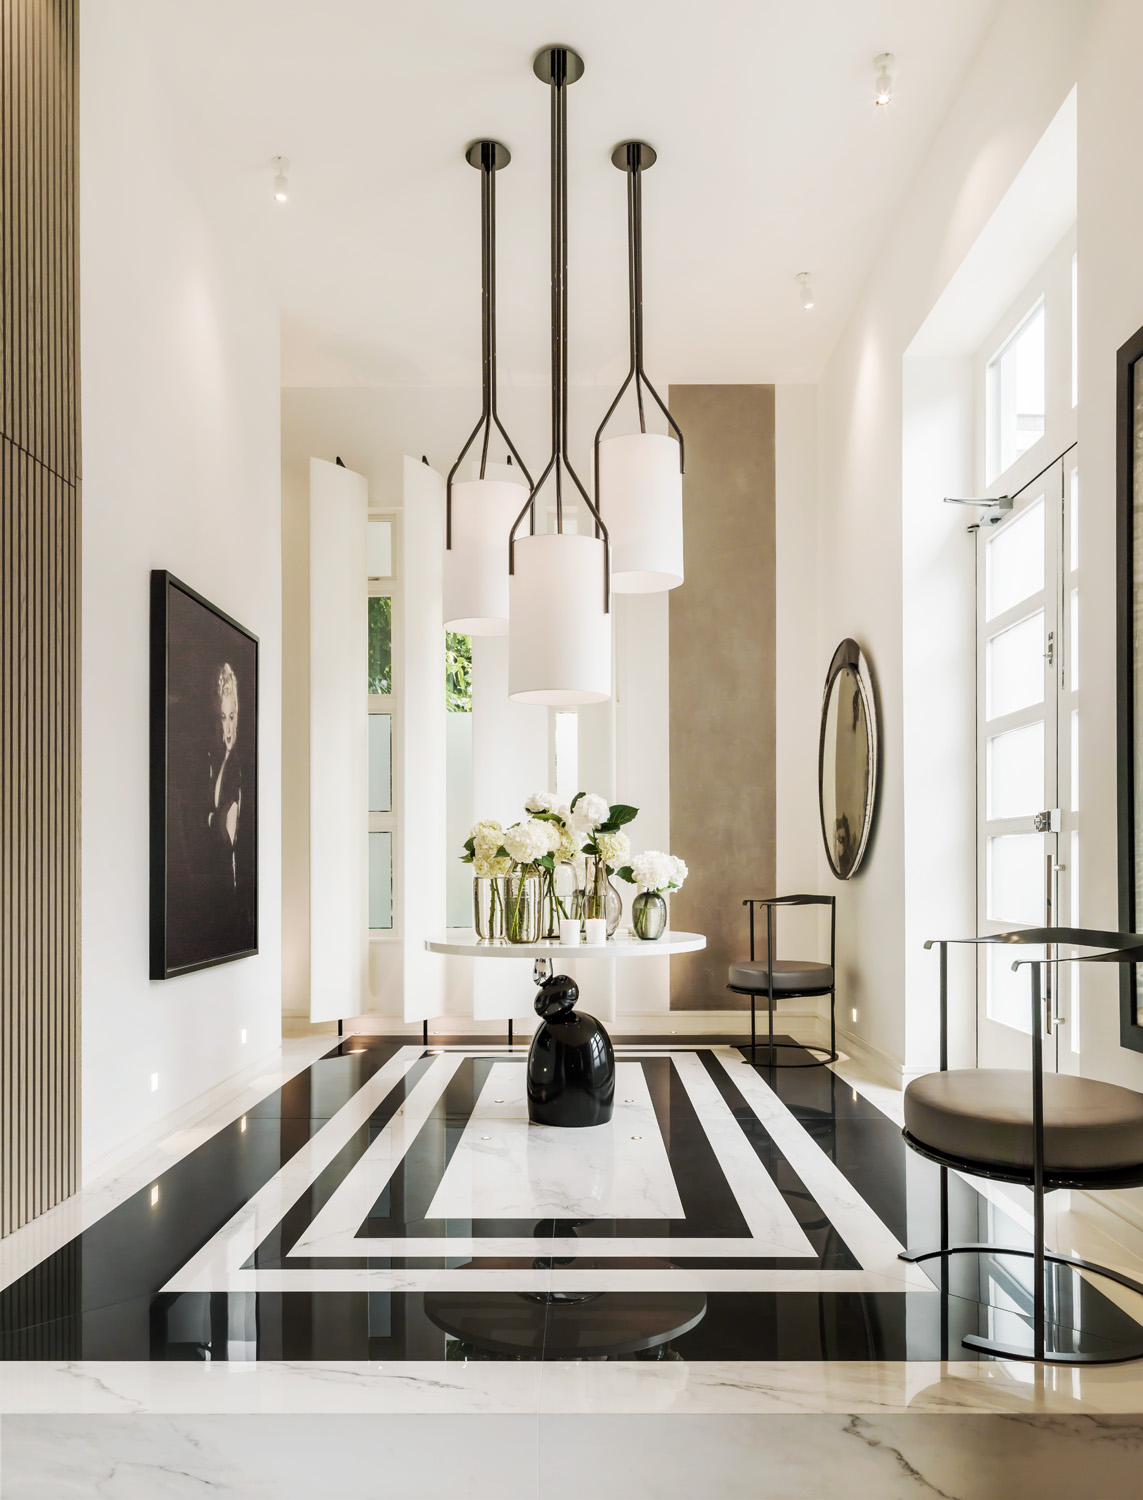 Hallway by Kelly Hoppen - luxury and minimalist interior design studio in London